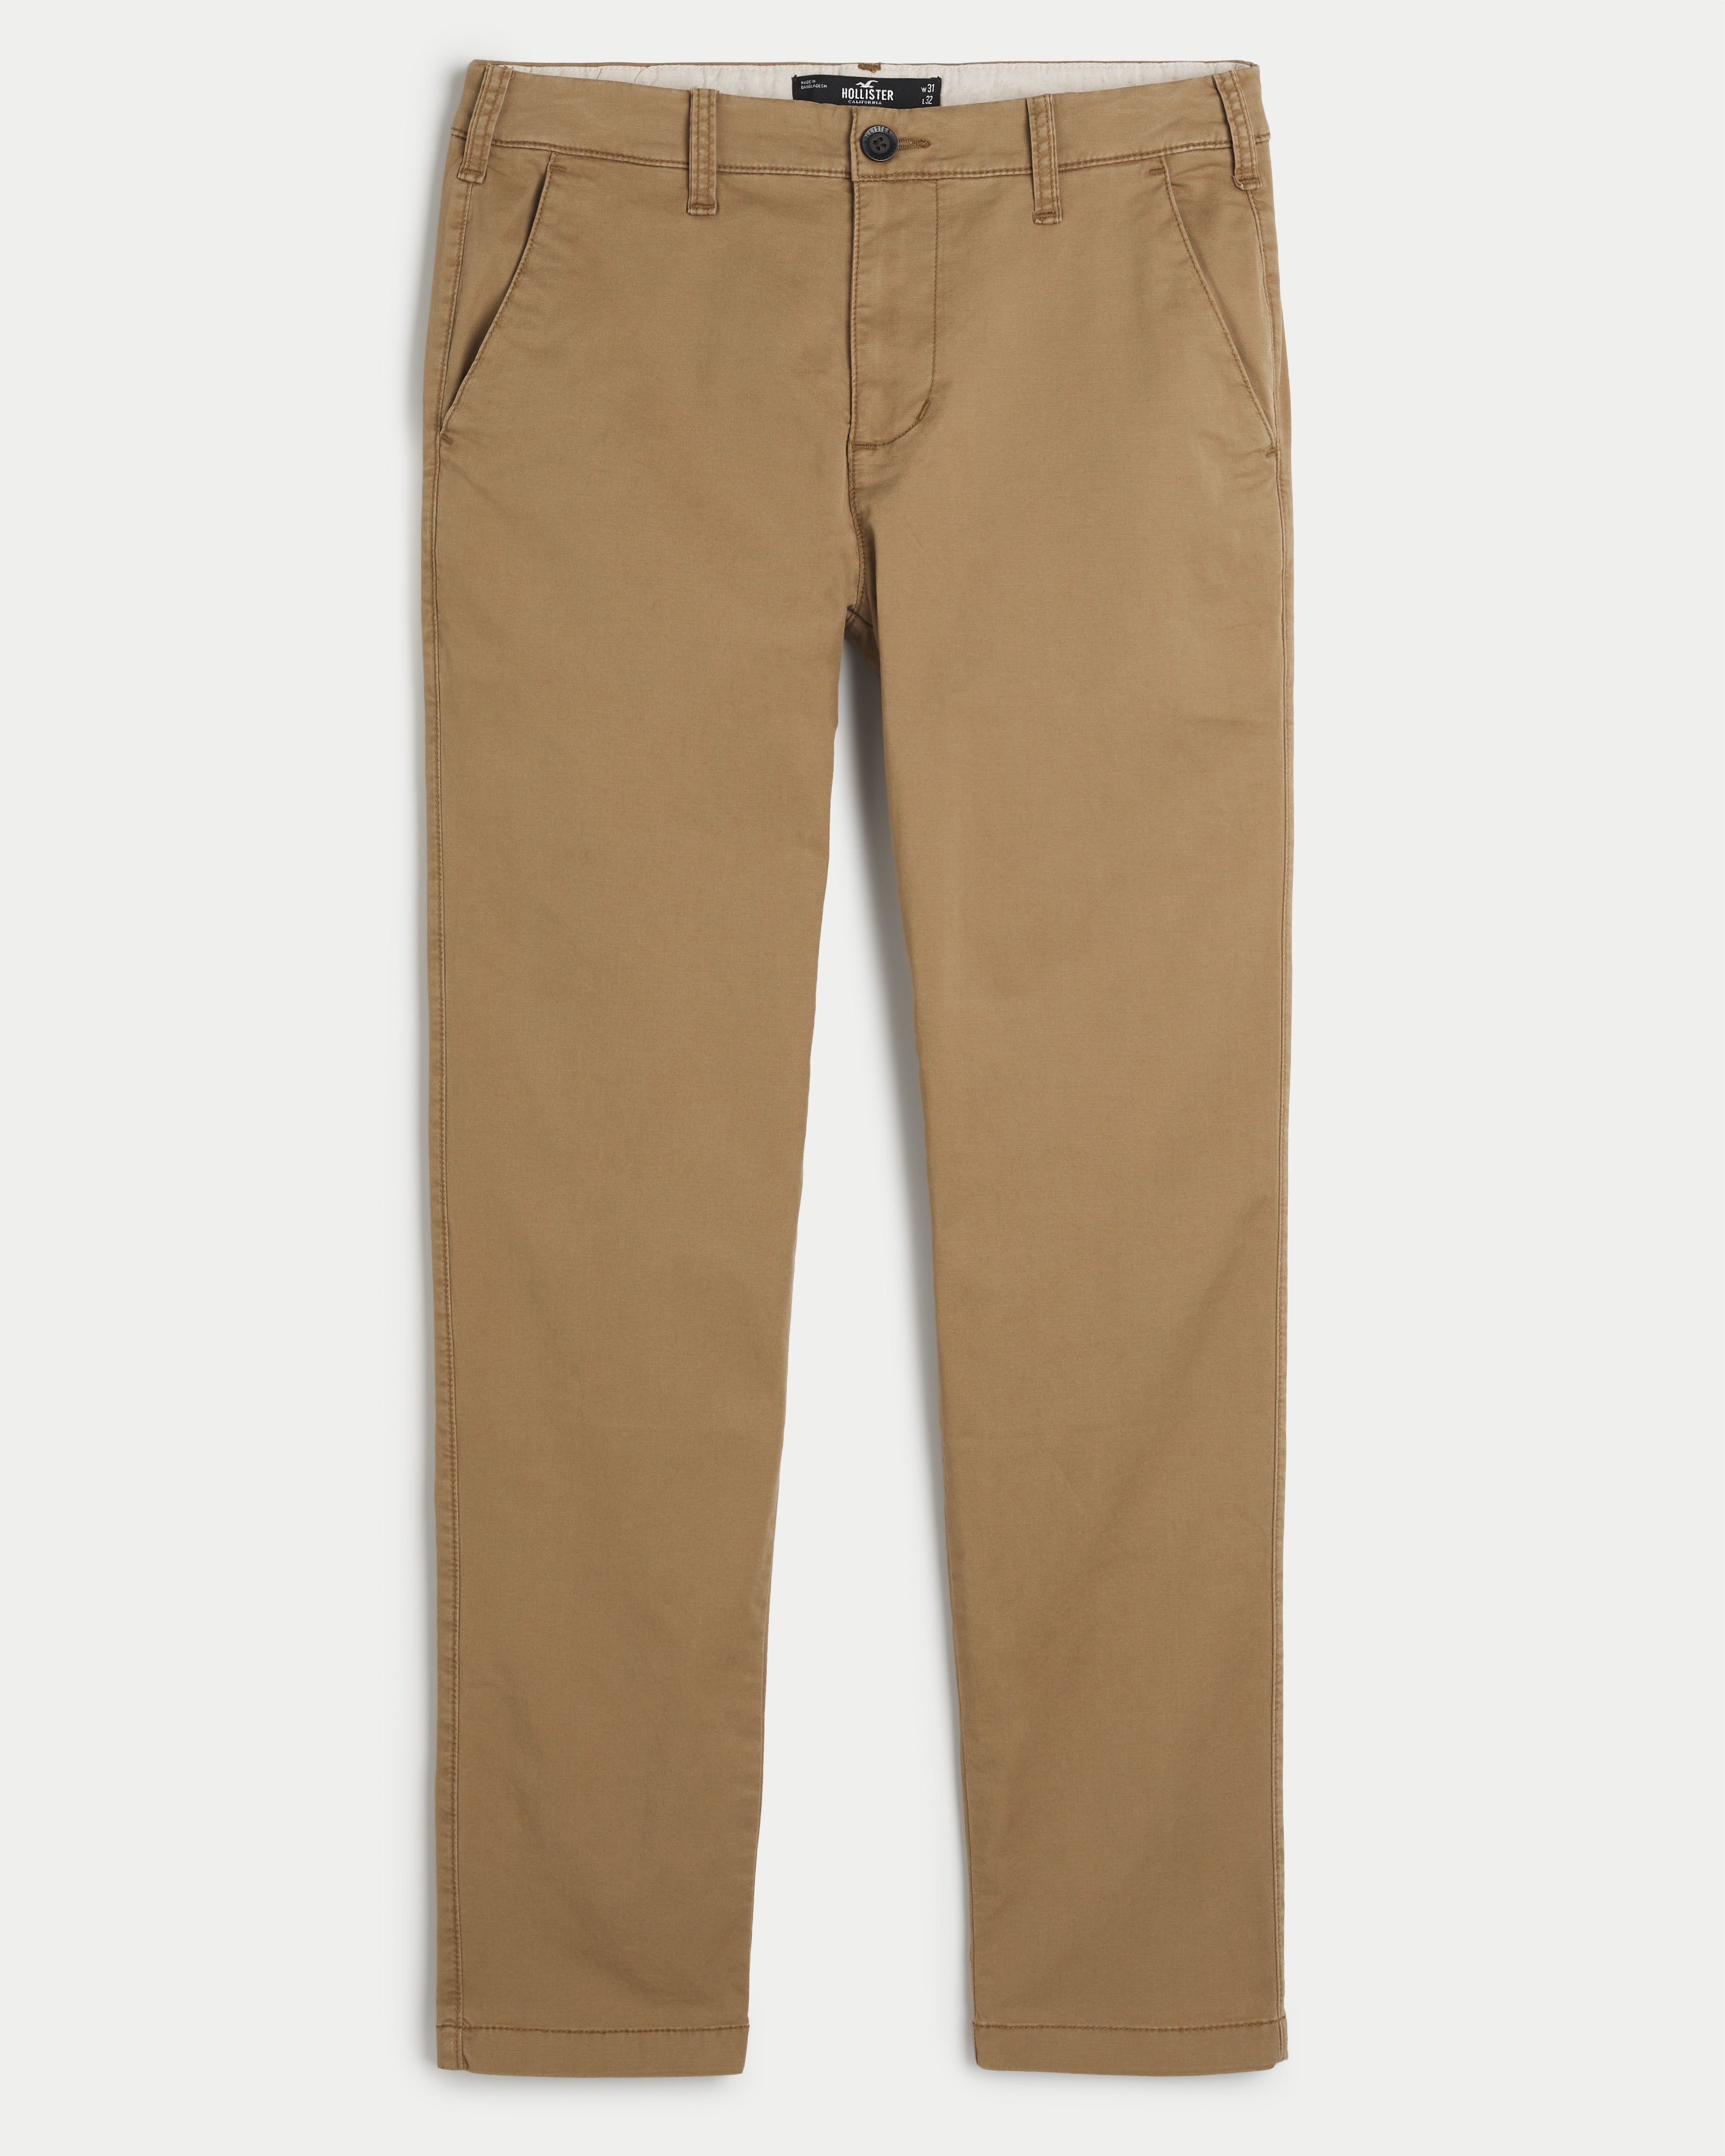 hollister skinny khaki pants